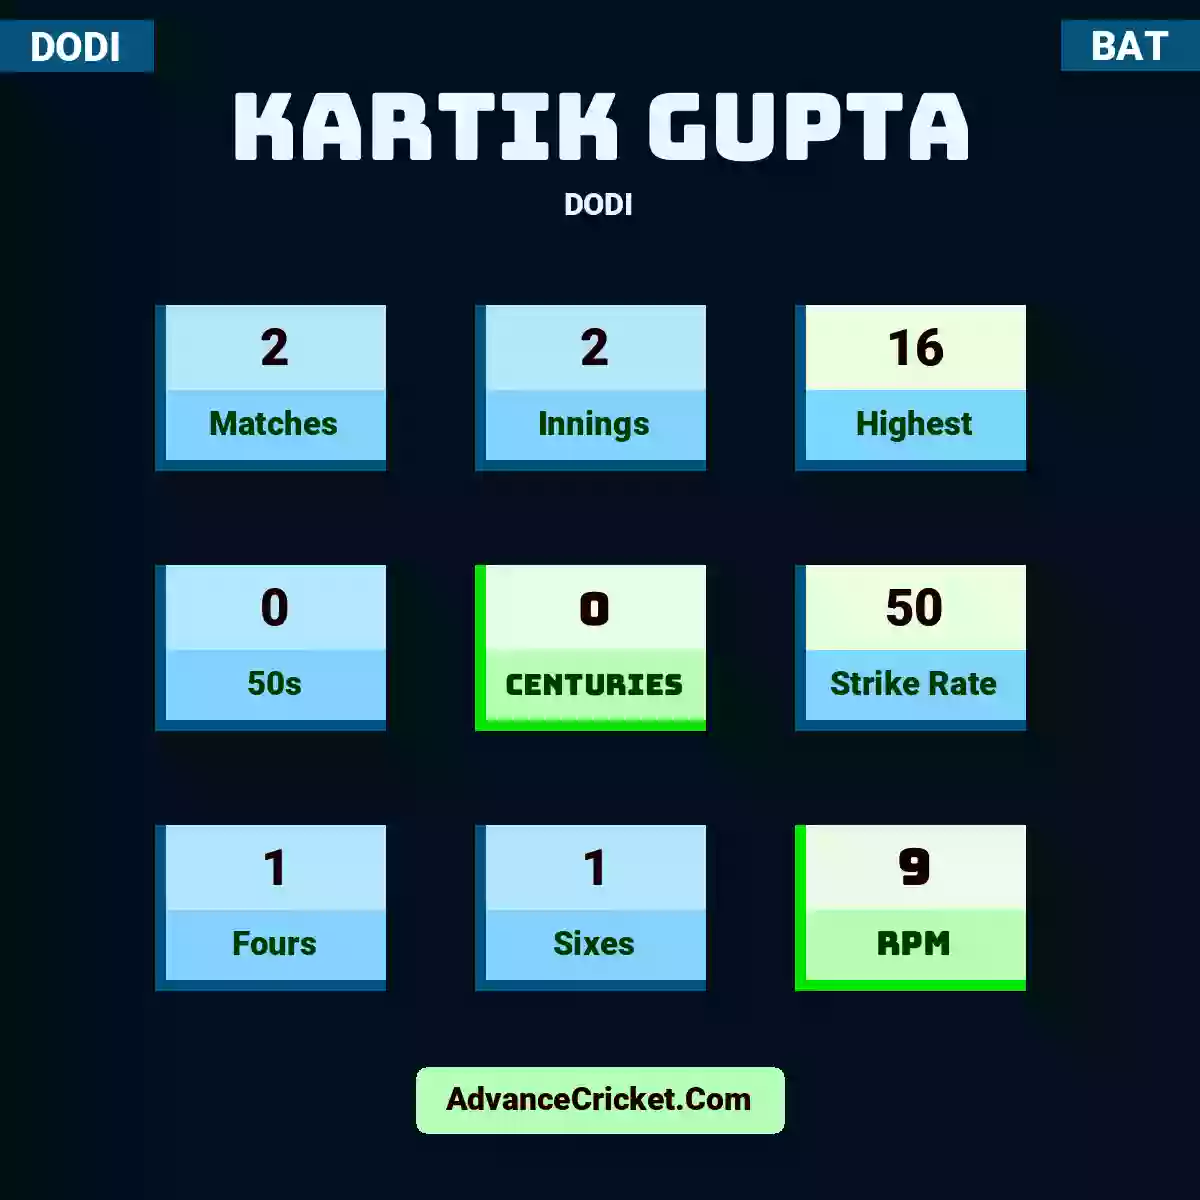 Kartik Gupta DODI , Kartik Gupta played 2 matches, scored 16 runs as highest, 0 half-centuries, and 0 centuries, with a strike rate of 50. K.Gupta hit 1 fours and 1 sixes, with an RPM of 9.